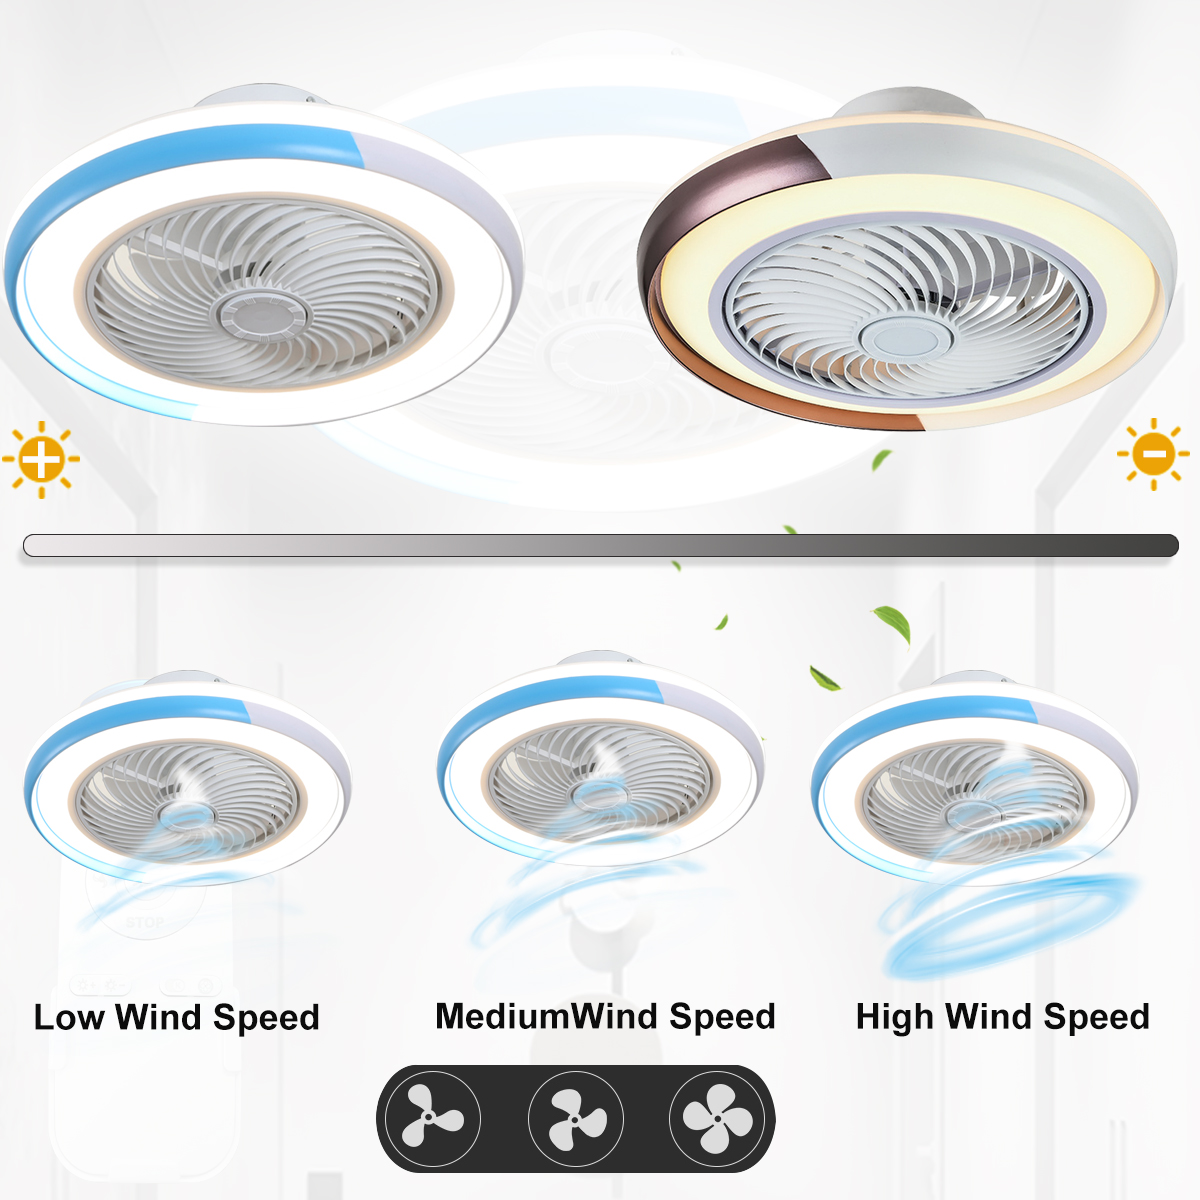 LED-Fan-Ceiling-Light-WiFi-Dimmable-Bedroom-Lamp-APPRemote-Control-220V-1861721-4